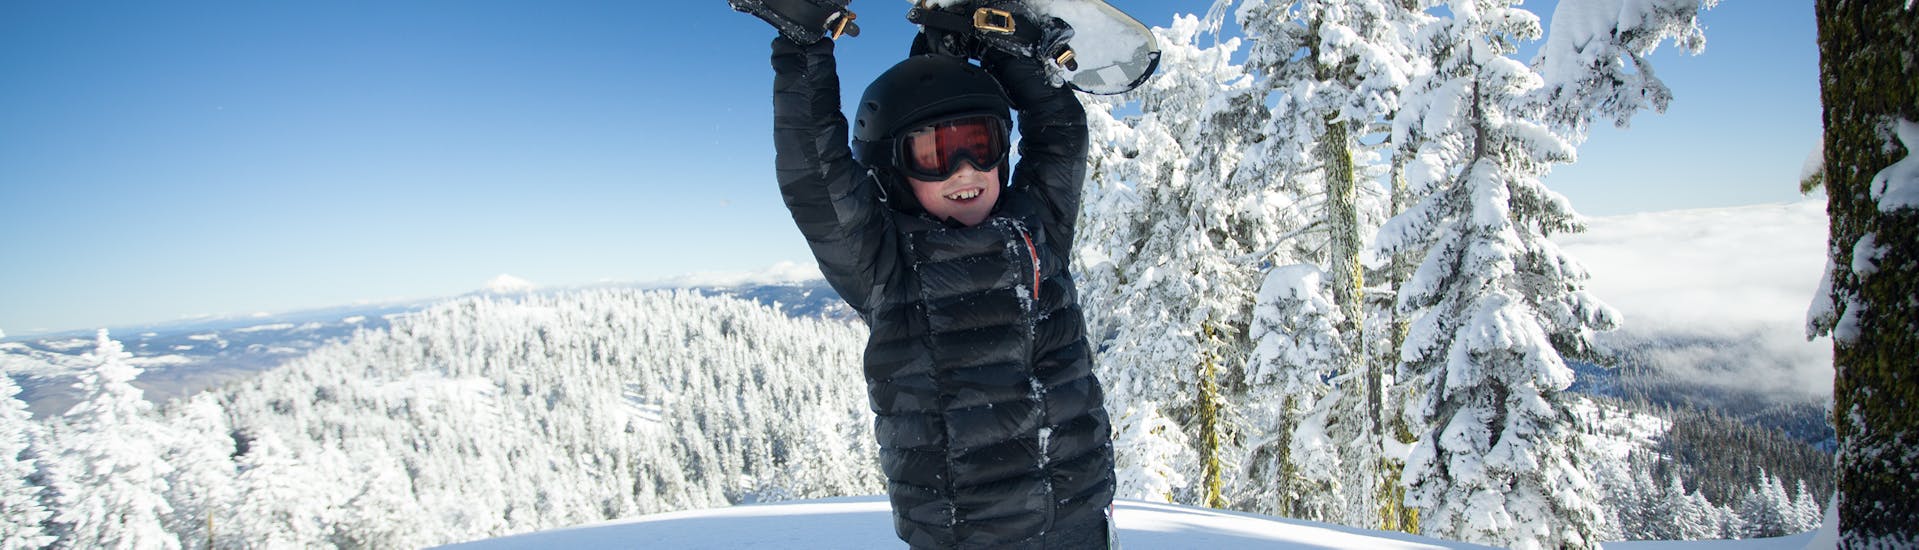 Lezioni di Snowboard a partire da 7 anni per tutti i livelli.